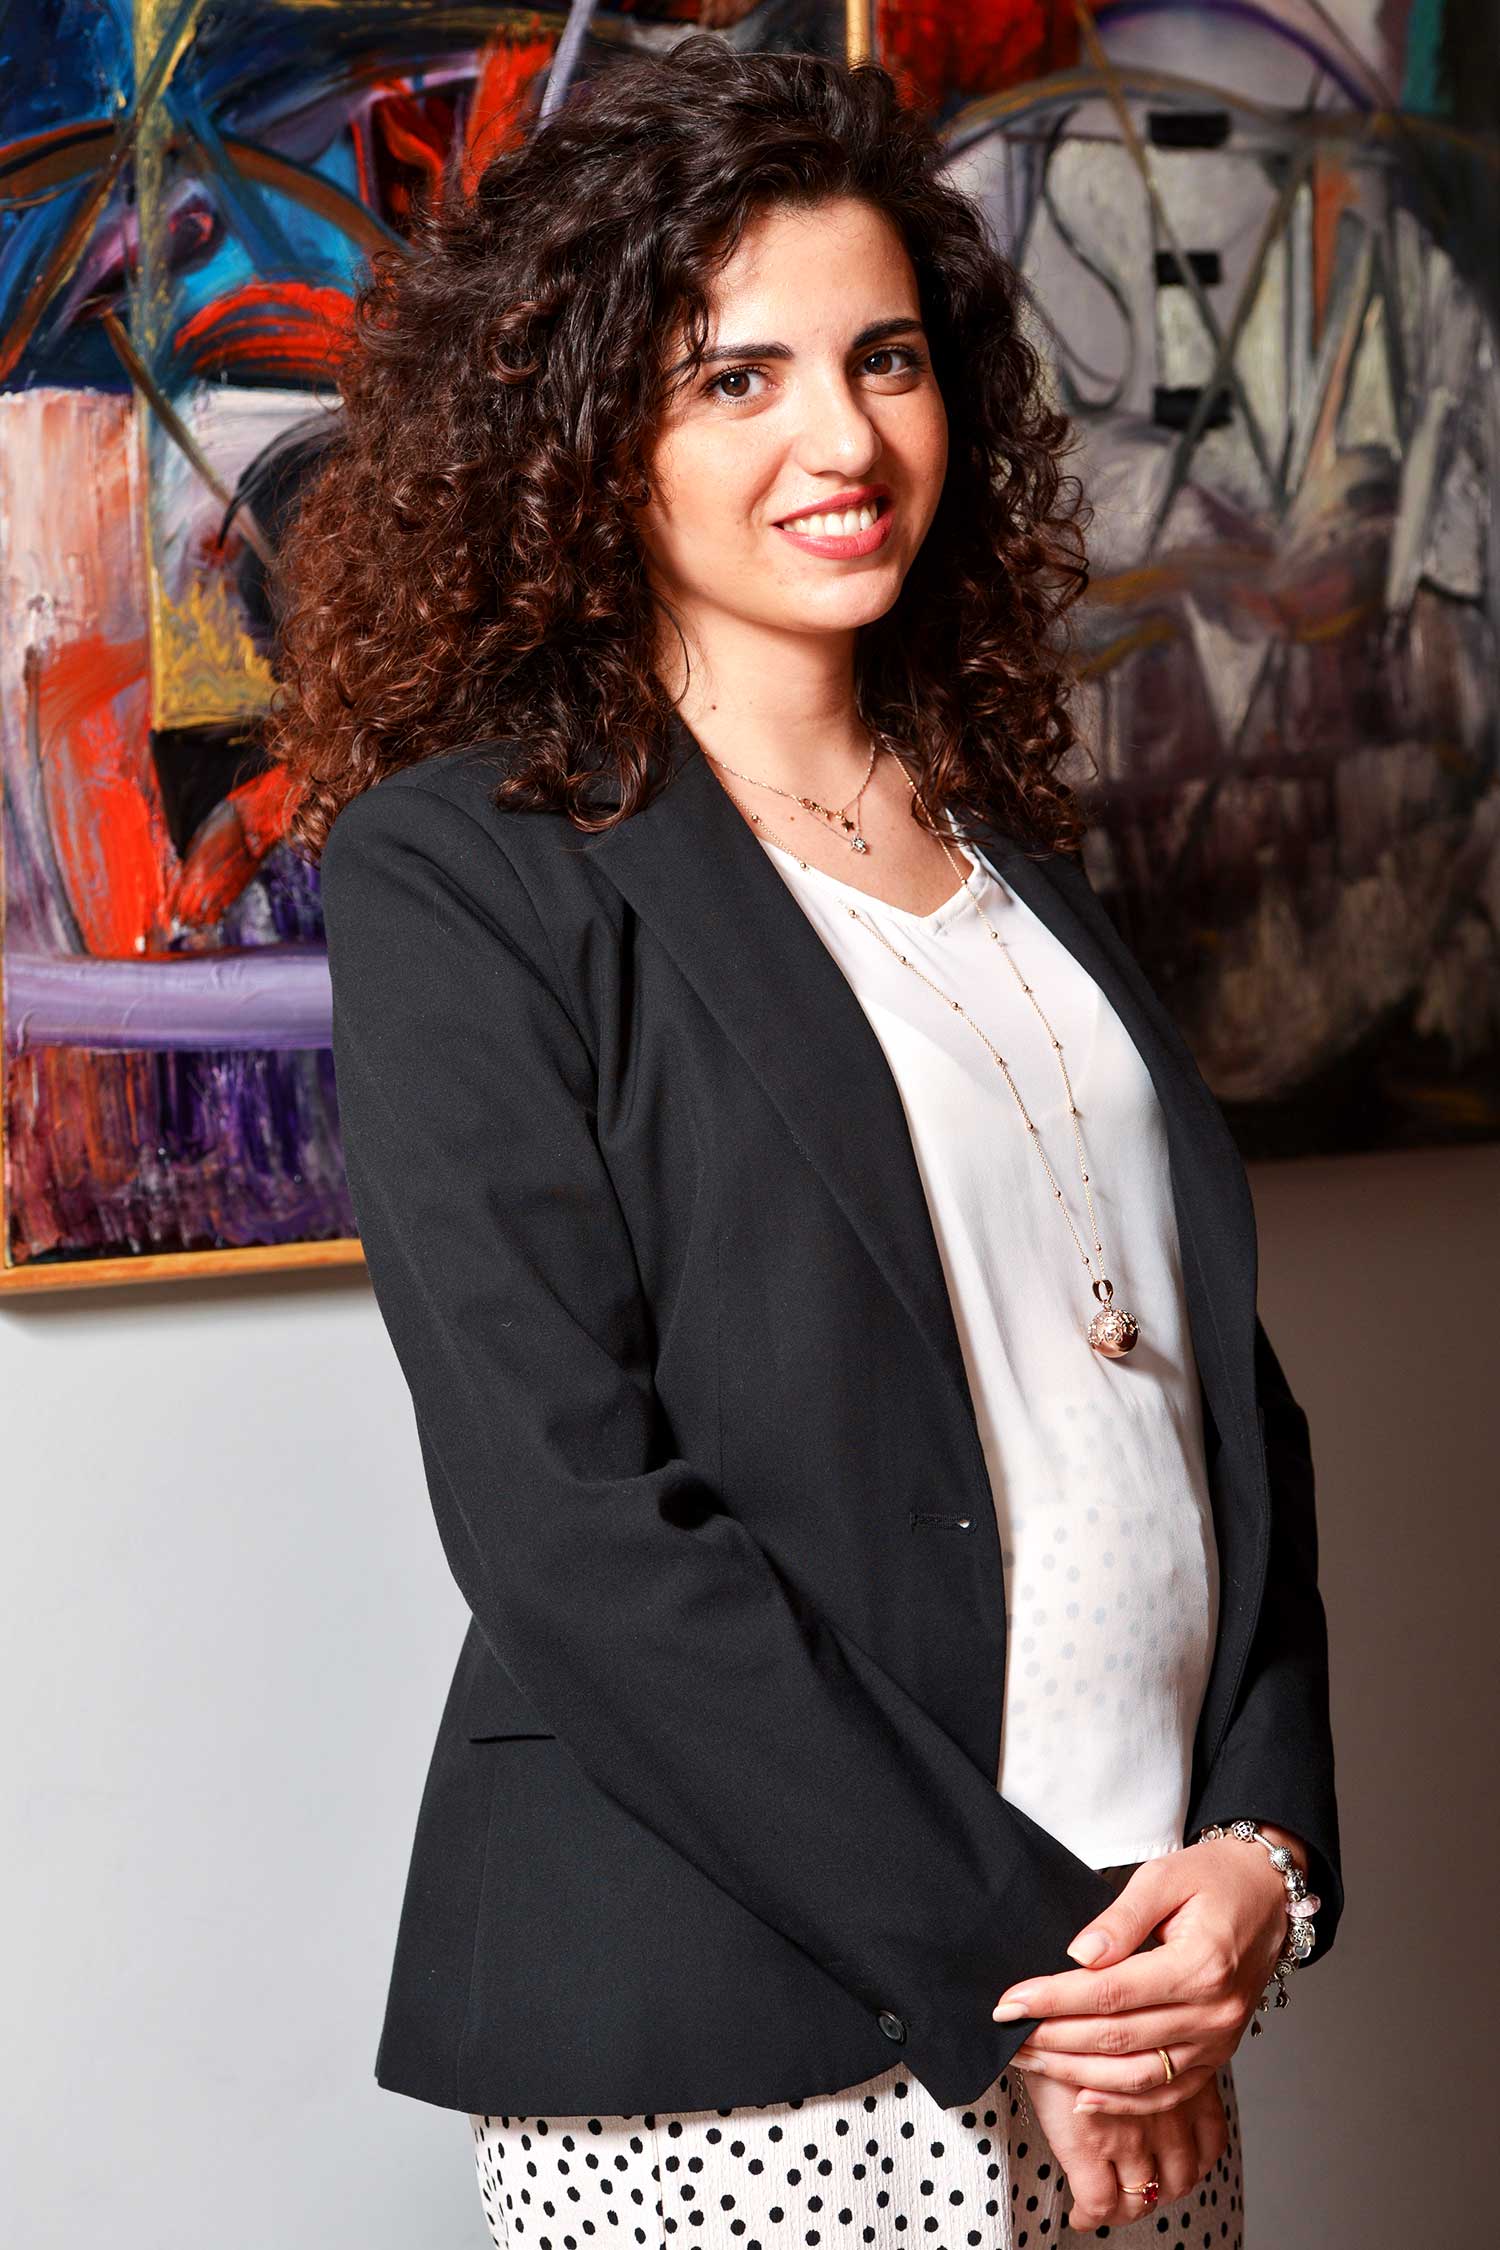 Lawyer Annamaria Rizzi